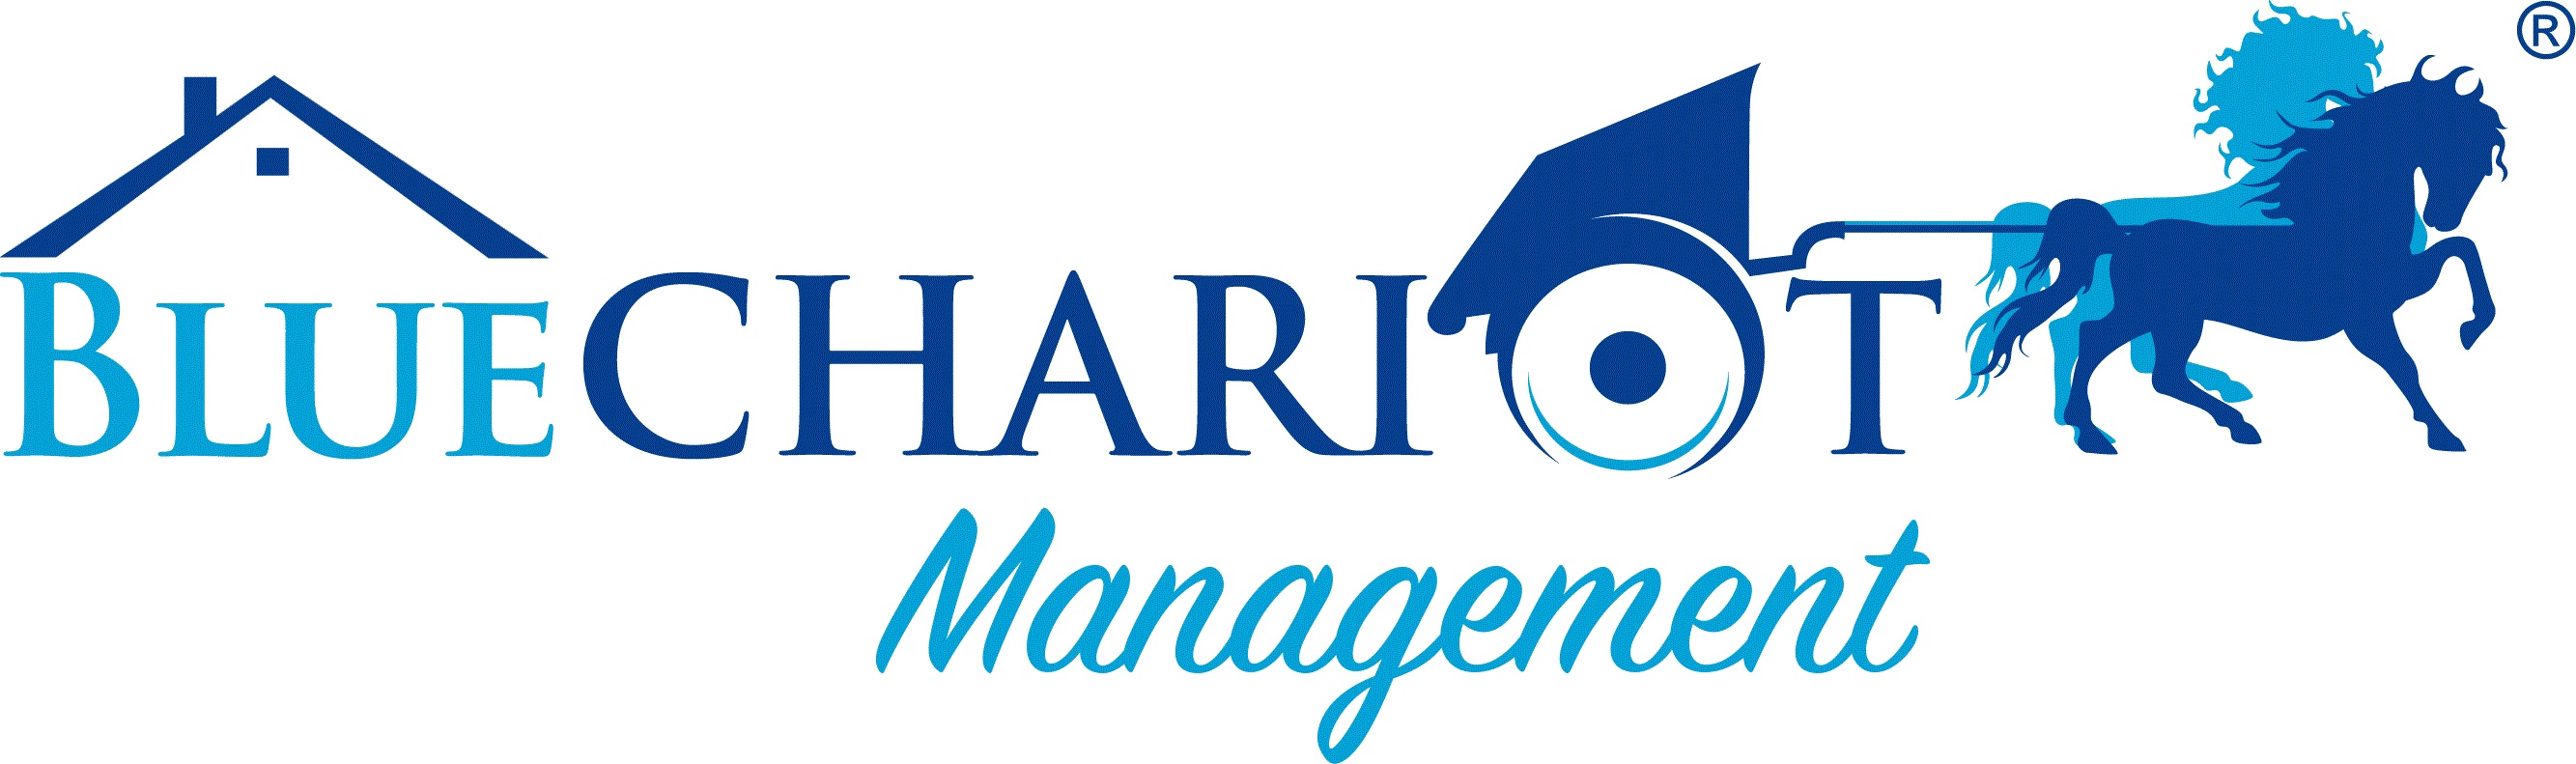 Blue Chariot Management logo